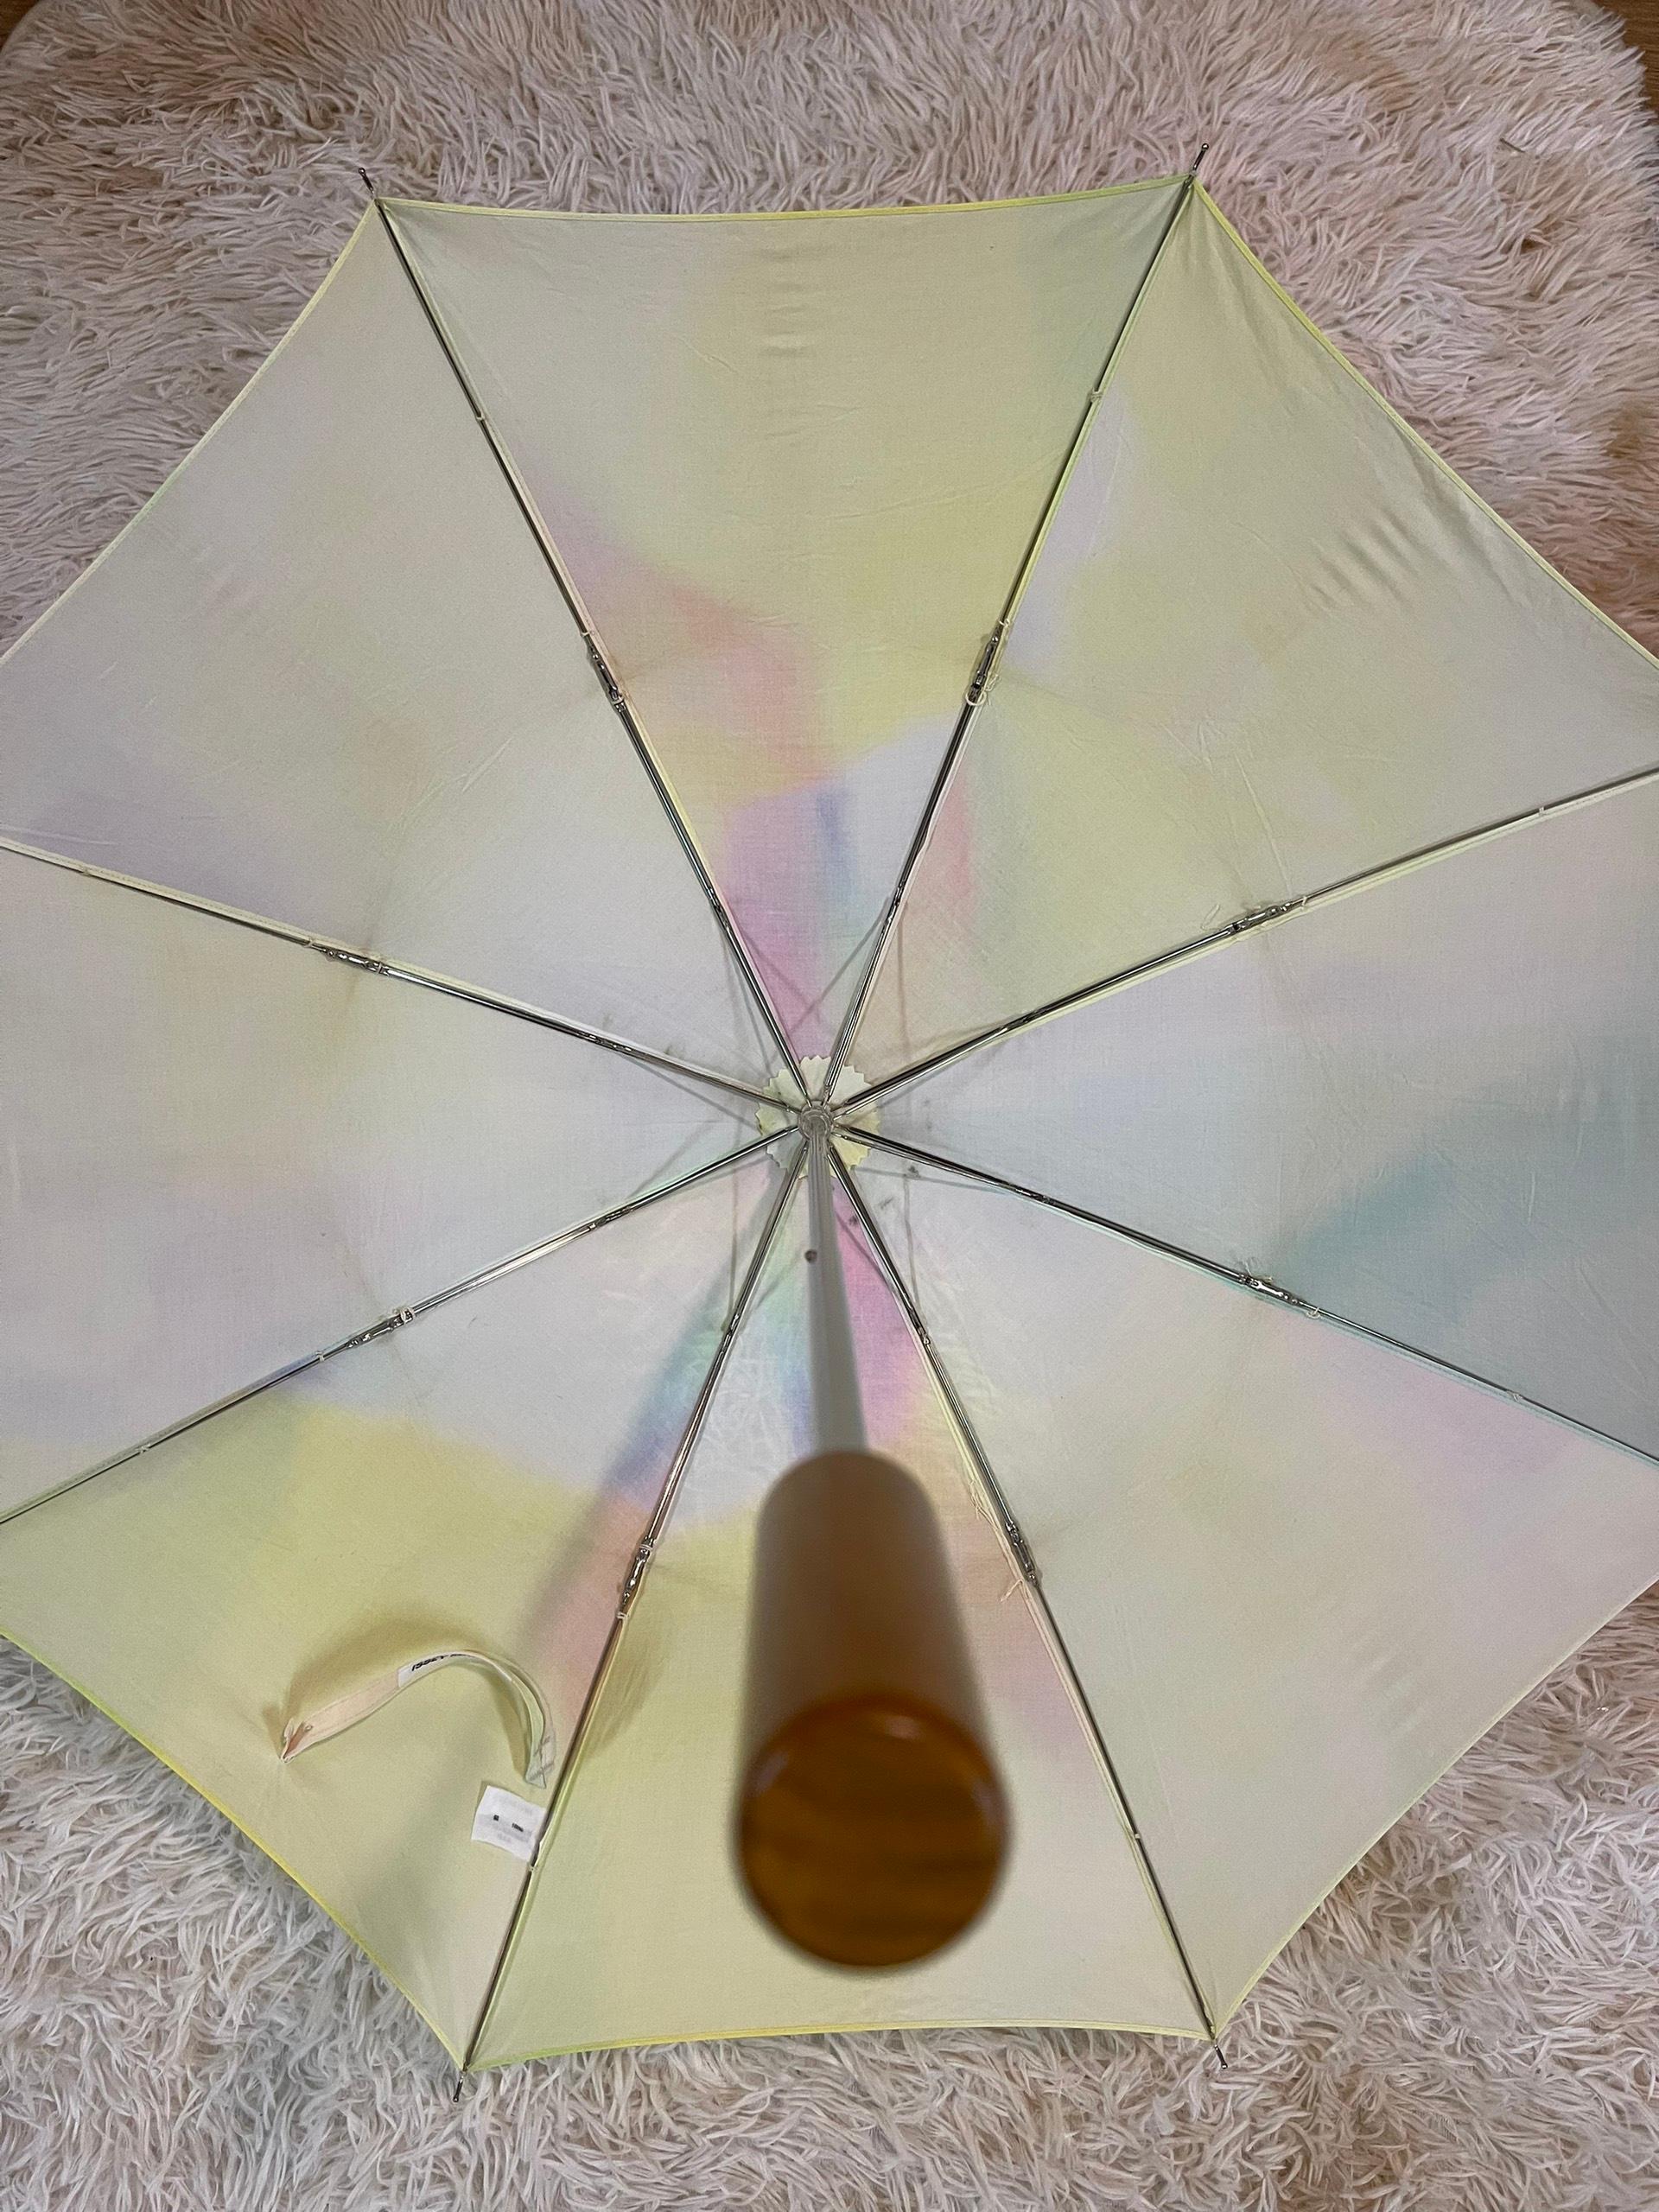 Issey Miyake Gradient Rainbow Umbrella In Excellent Condition In Seattle, WA